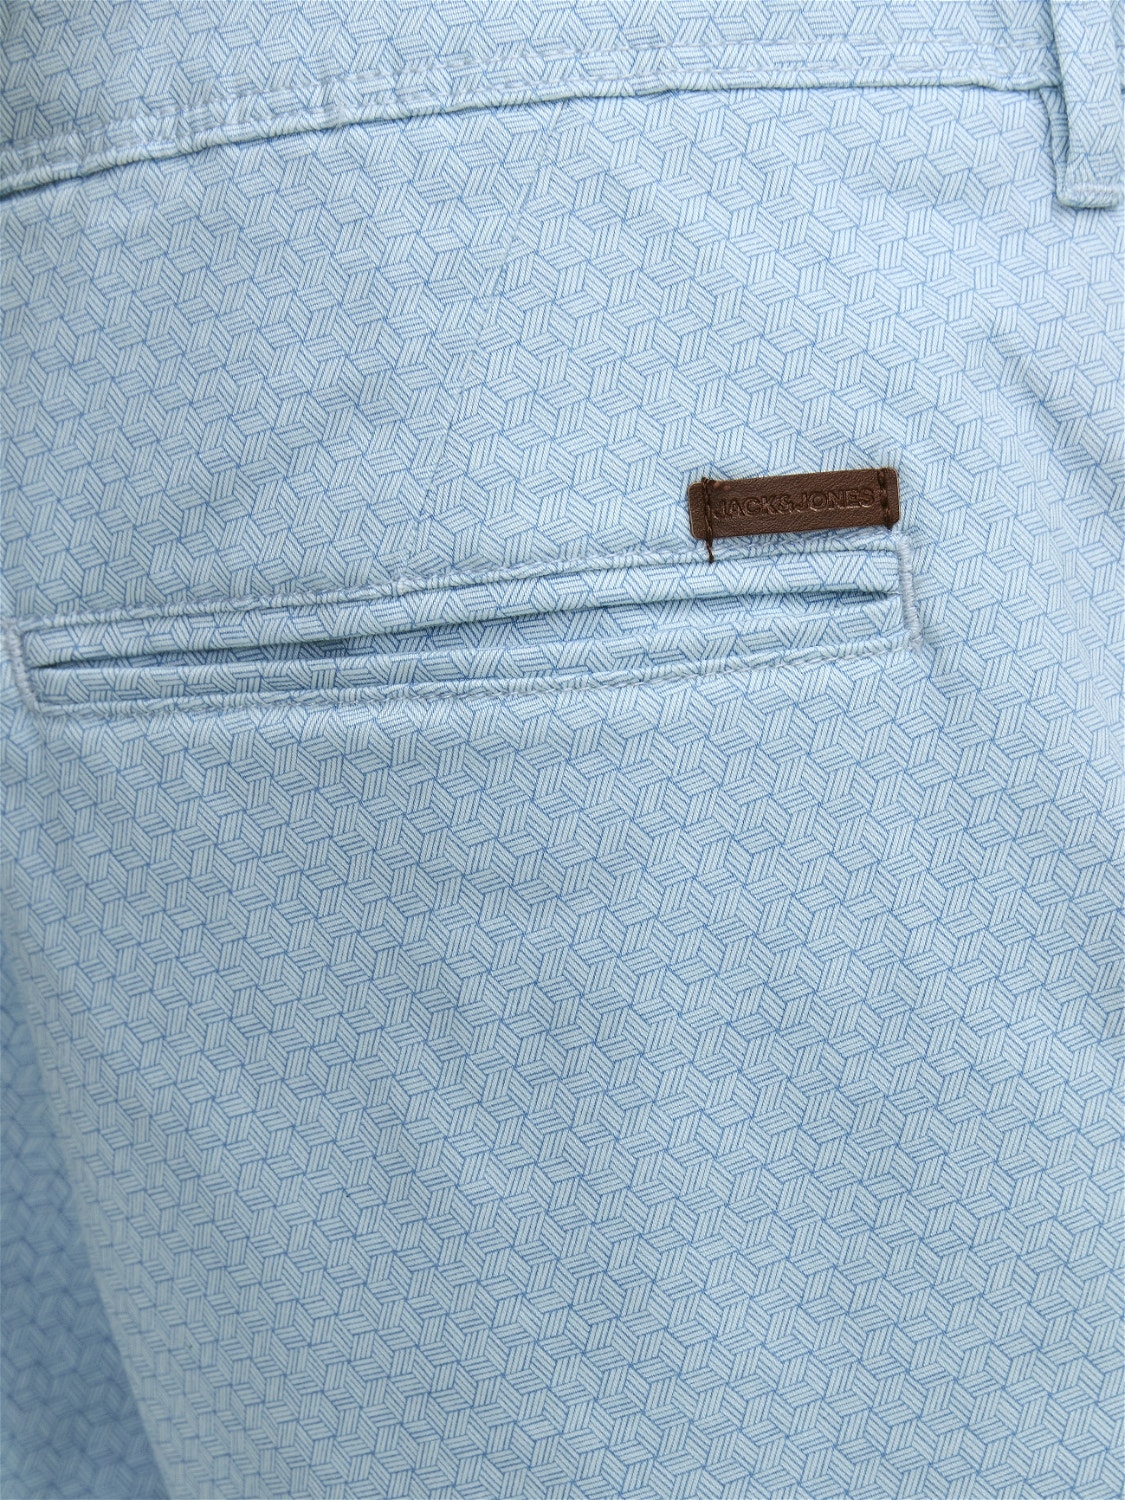 Jack & Jones Regular Fit Chino shorts -Soothing Sea - 12230336